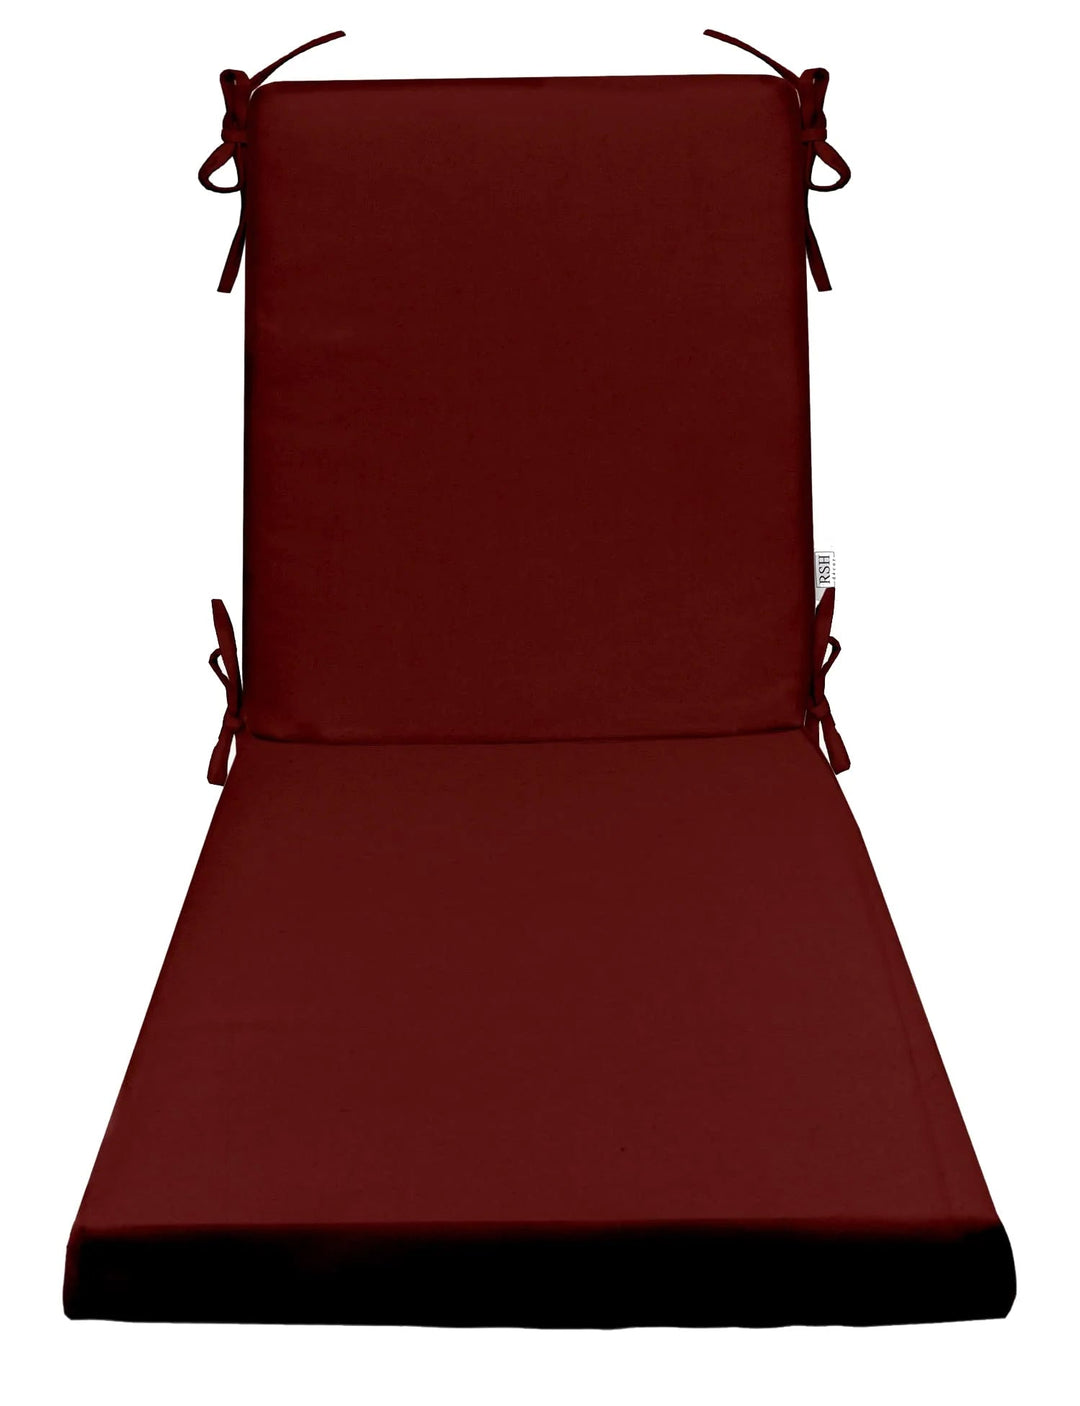 Chaise Lounge Chair Cushion, Foam, 72" H x 22" W", Sunbrella Solid, Essential Russet - RSH Decor